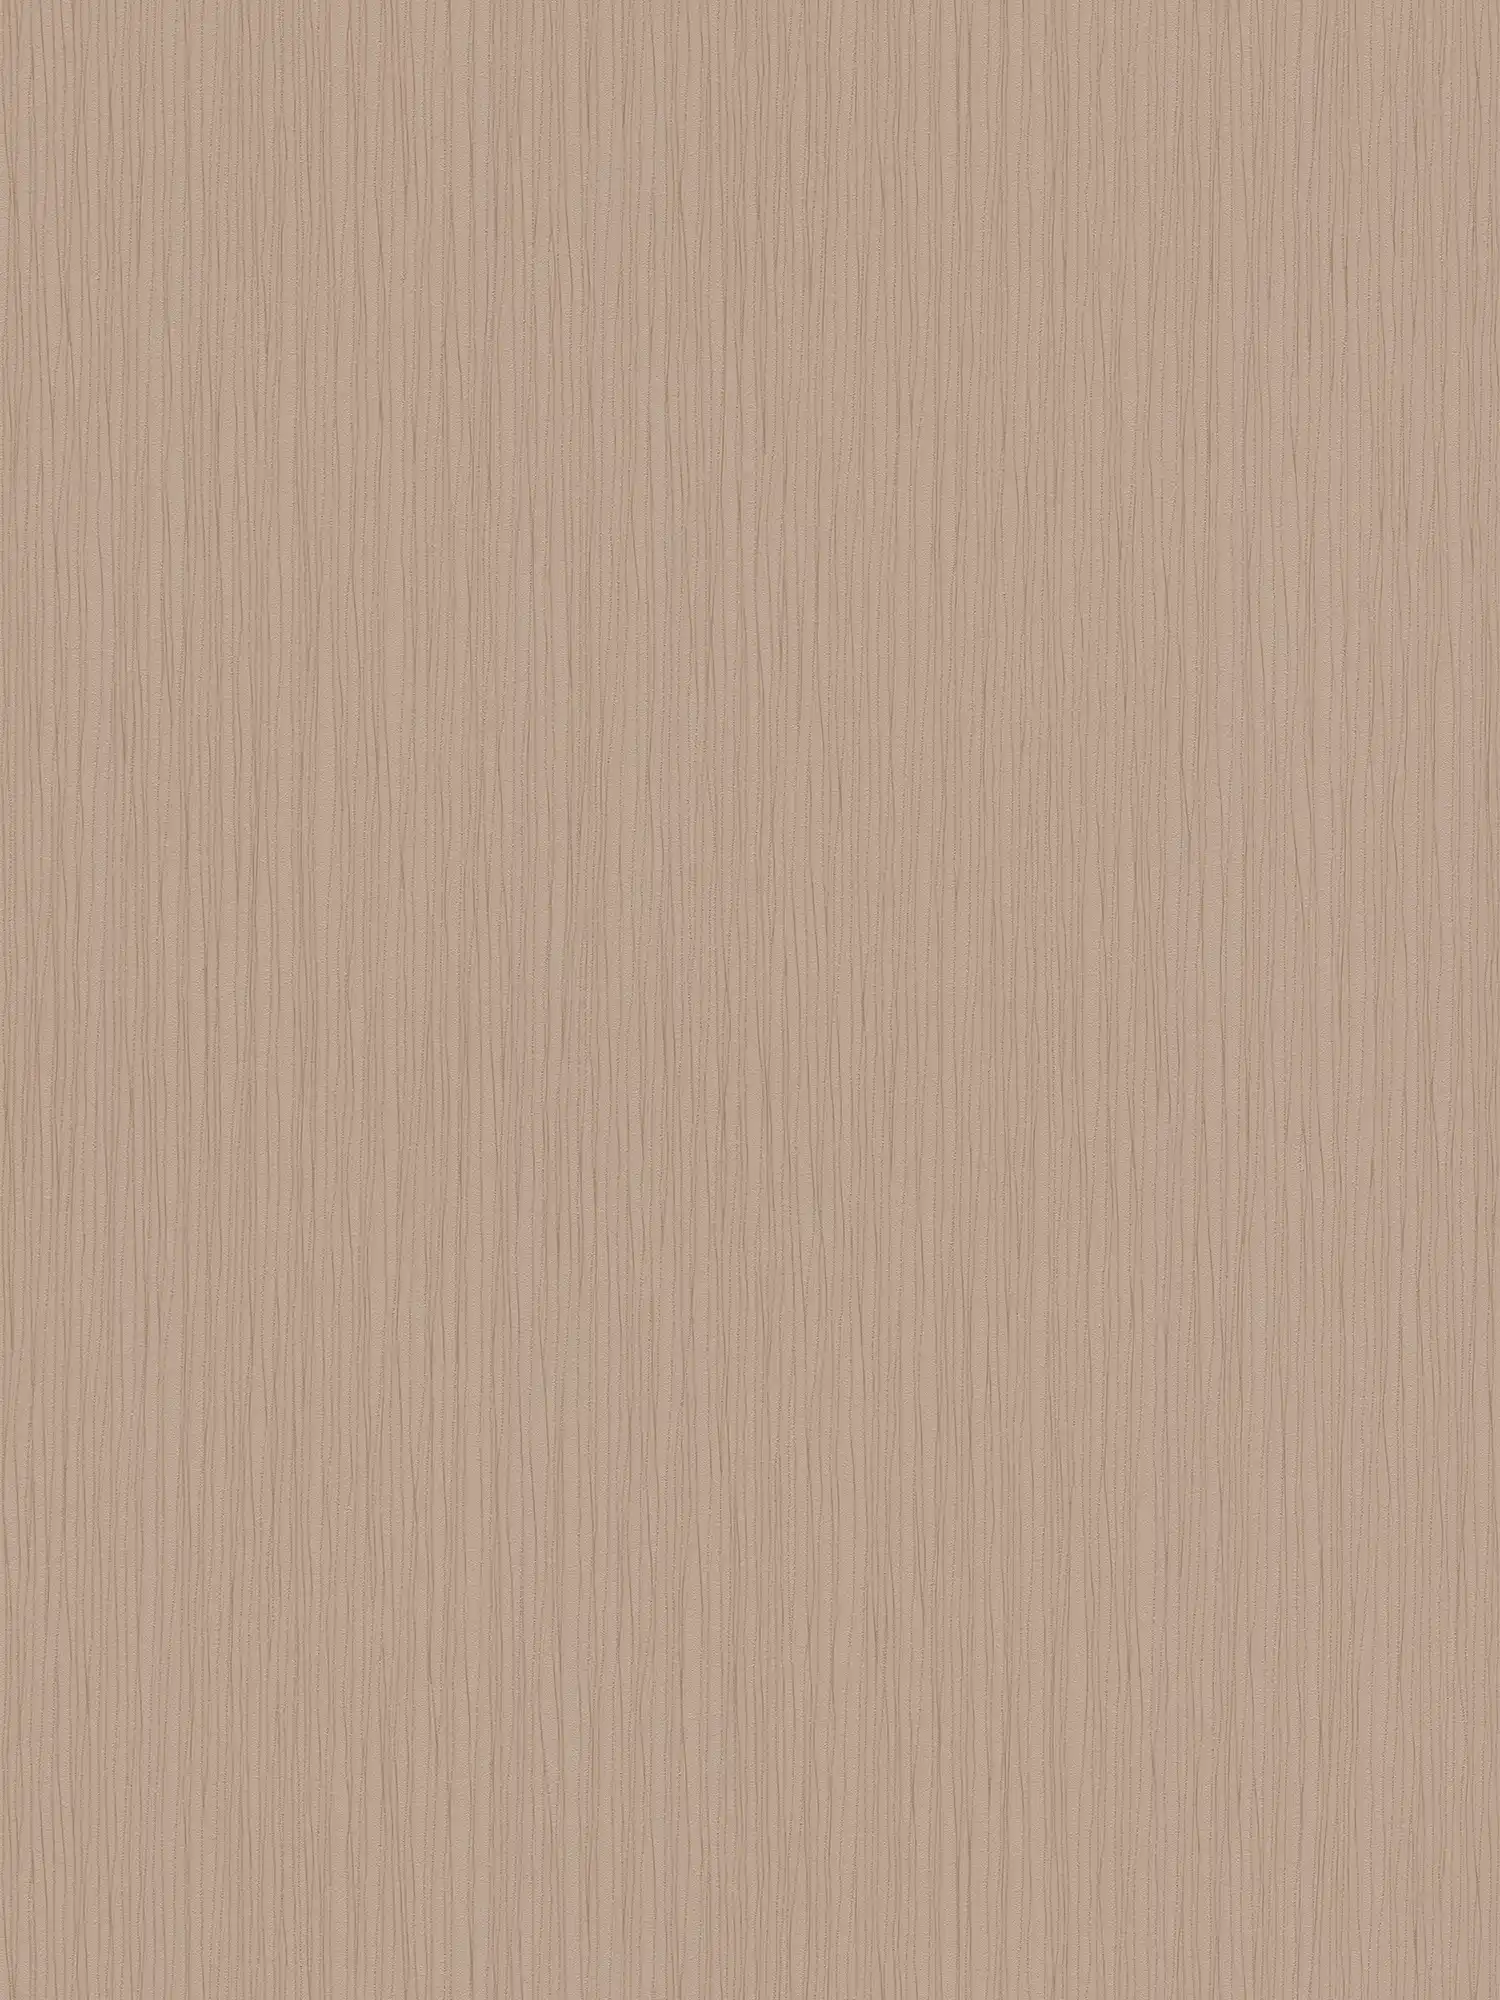 Brown wallpaper with metallic lines & embossed pattern
